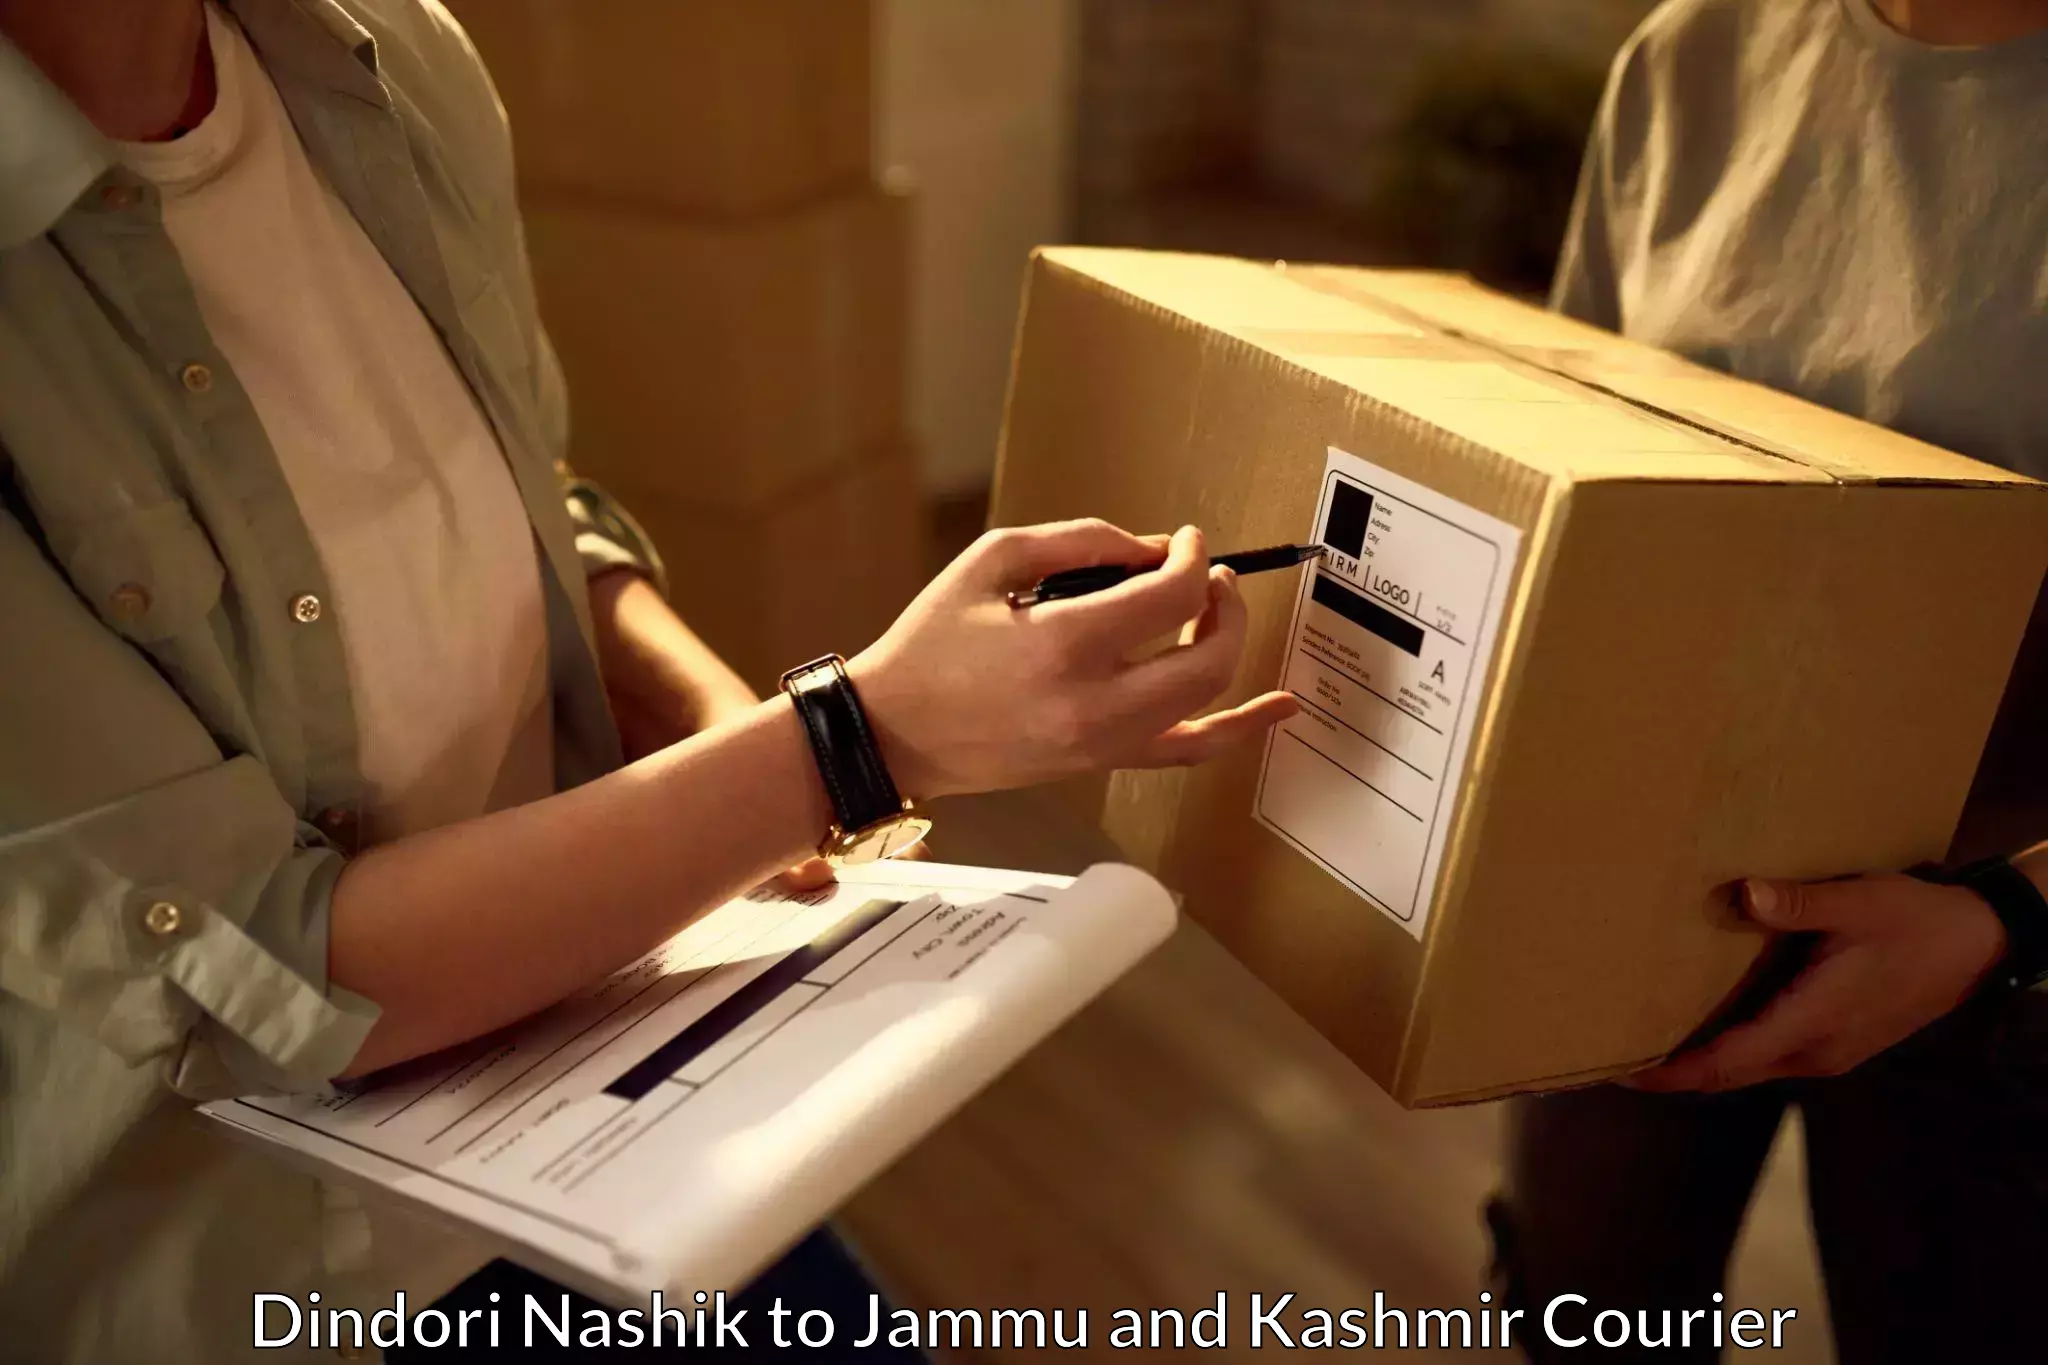 Cash on delivery service Dindori Nashik to Rajouri